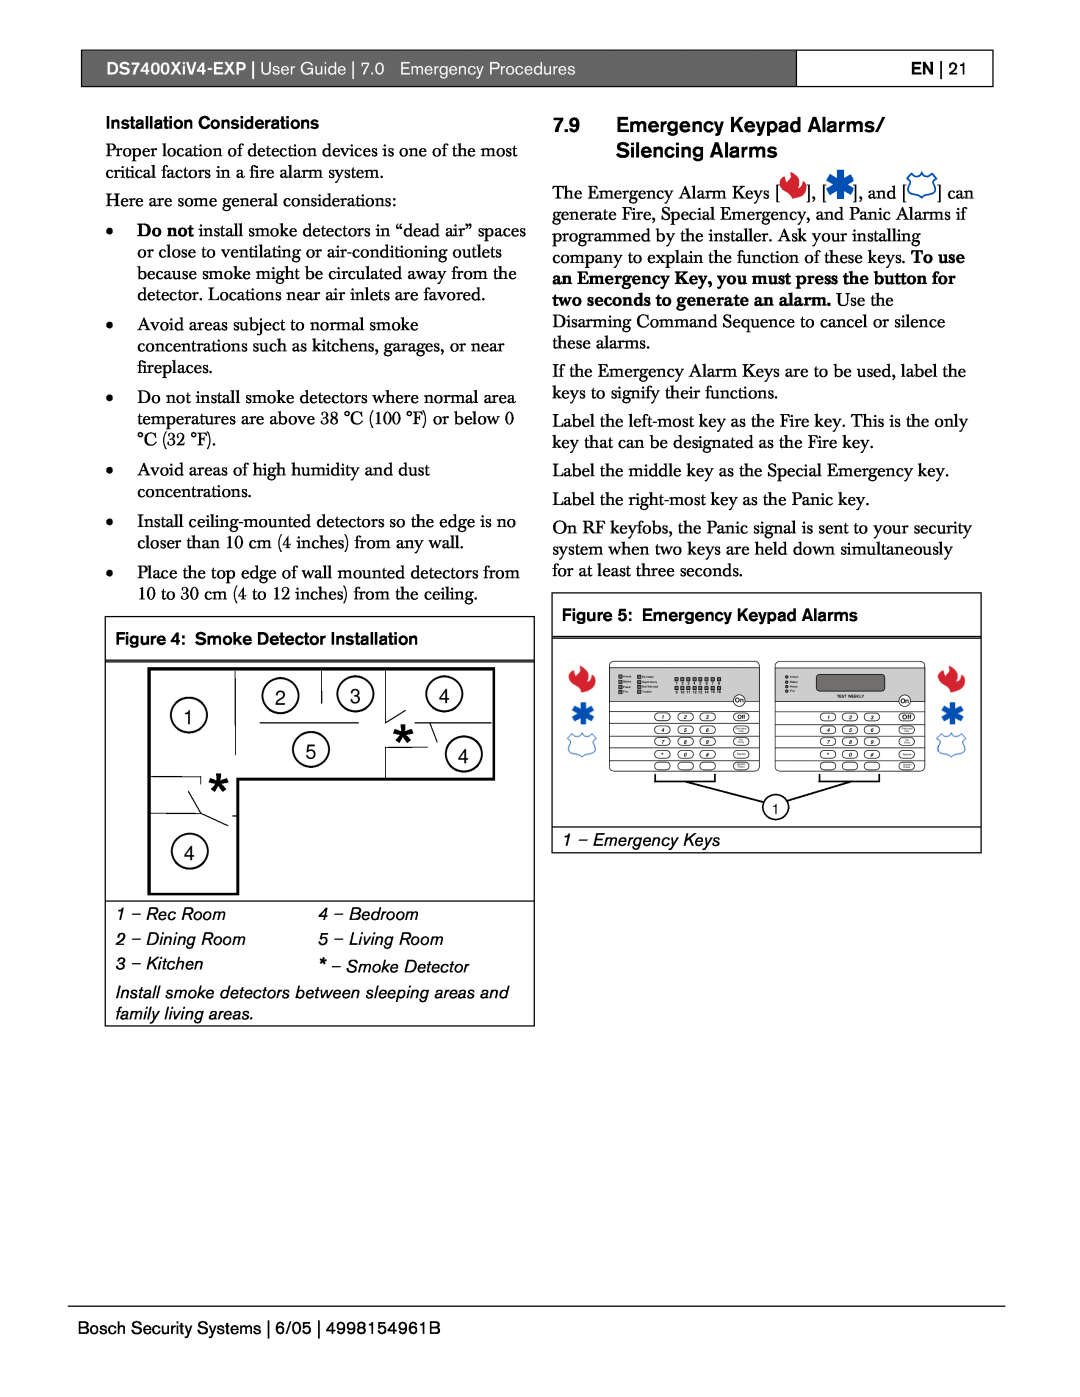 Bosch Appliances DS7400XIV4-EXP manual 7.9Emergency Keypad Alarms/ Silencing Alarms, Emergency Keys 